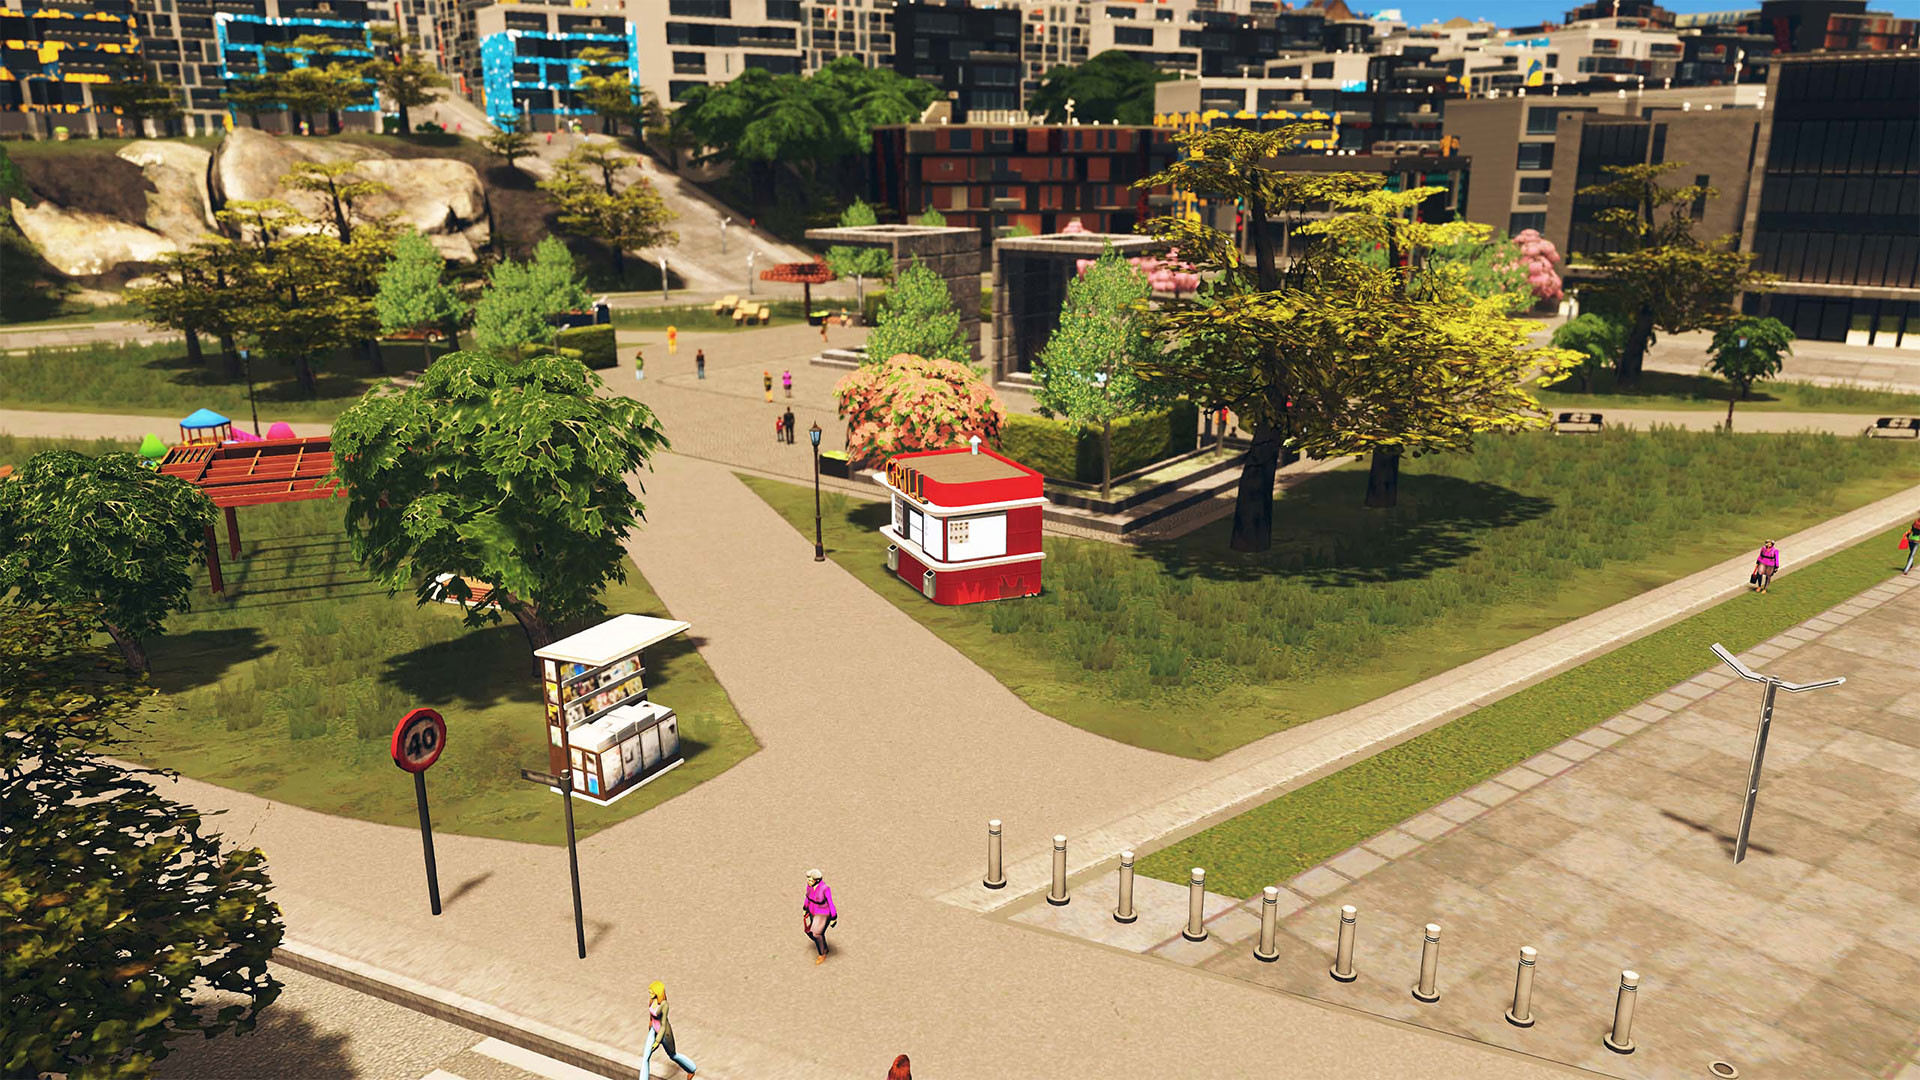 Comprar Cities: Skylines - Plazas & Promenades Steam